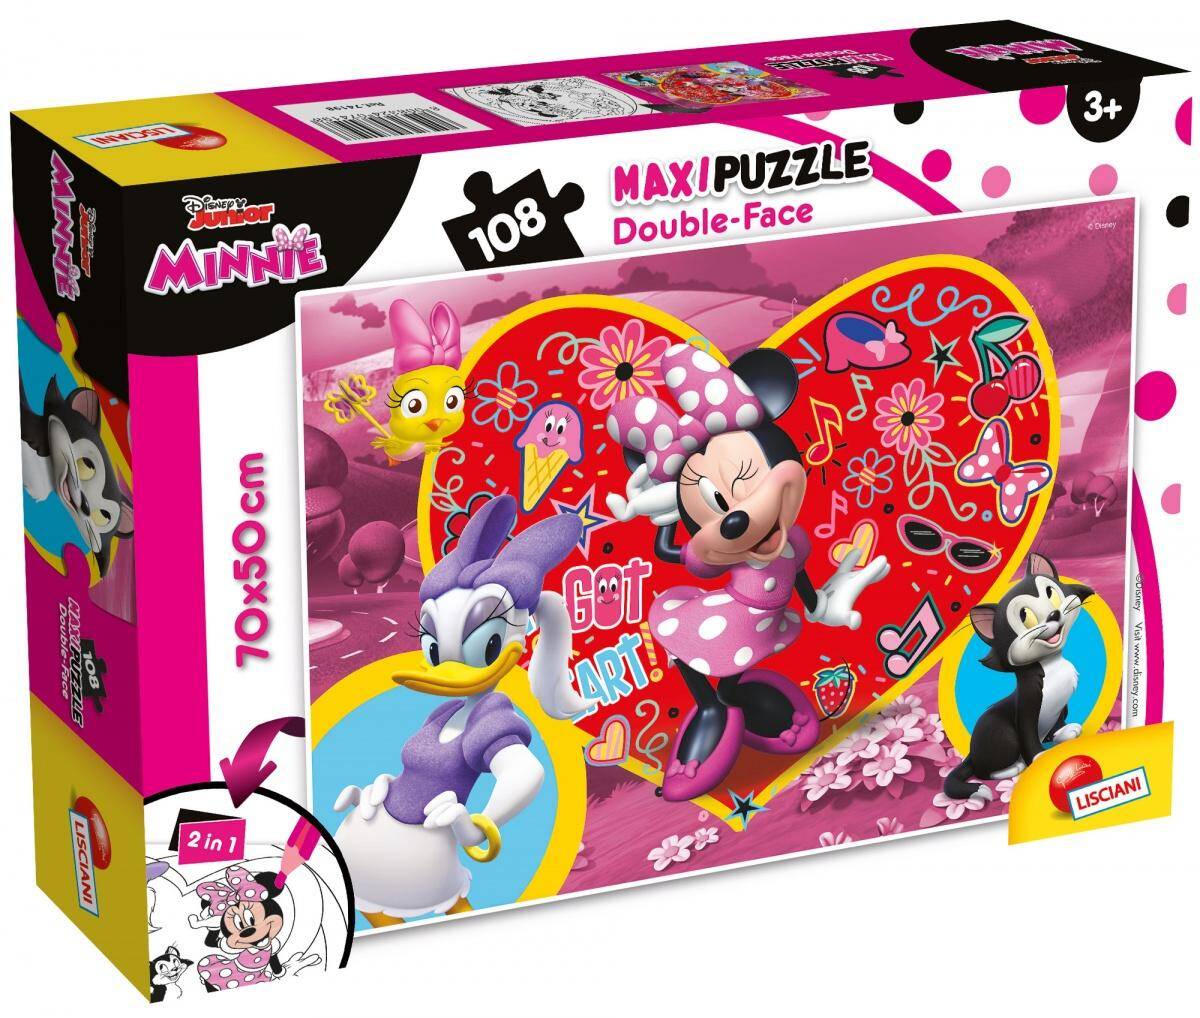 Puzzle 108 maxi double-face Minnie 304-74198